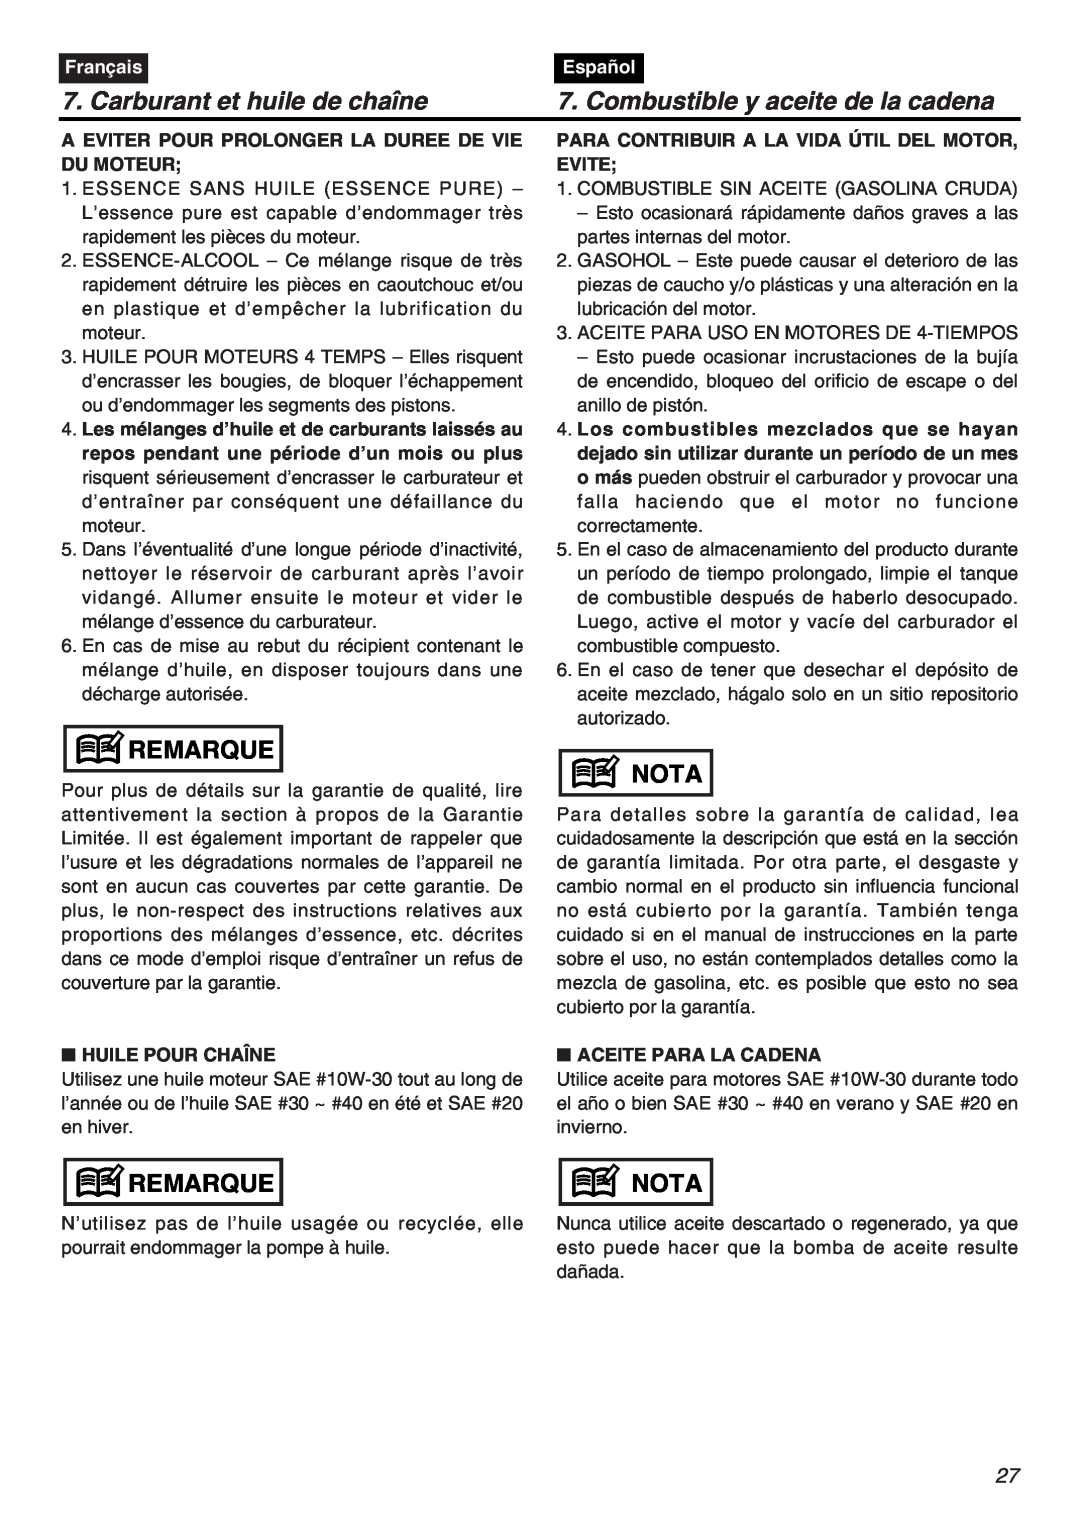 Zenoah G3800AVS manual Carburant et huile de chaîne, Combustible y aceite de la cadena, Remarque, Nota, Français, Español 